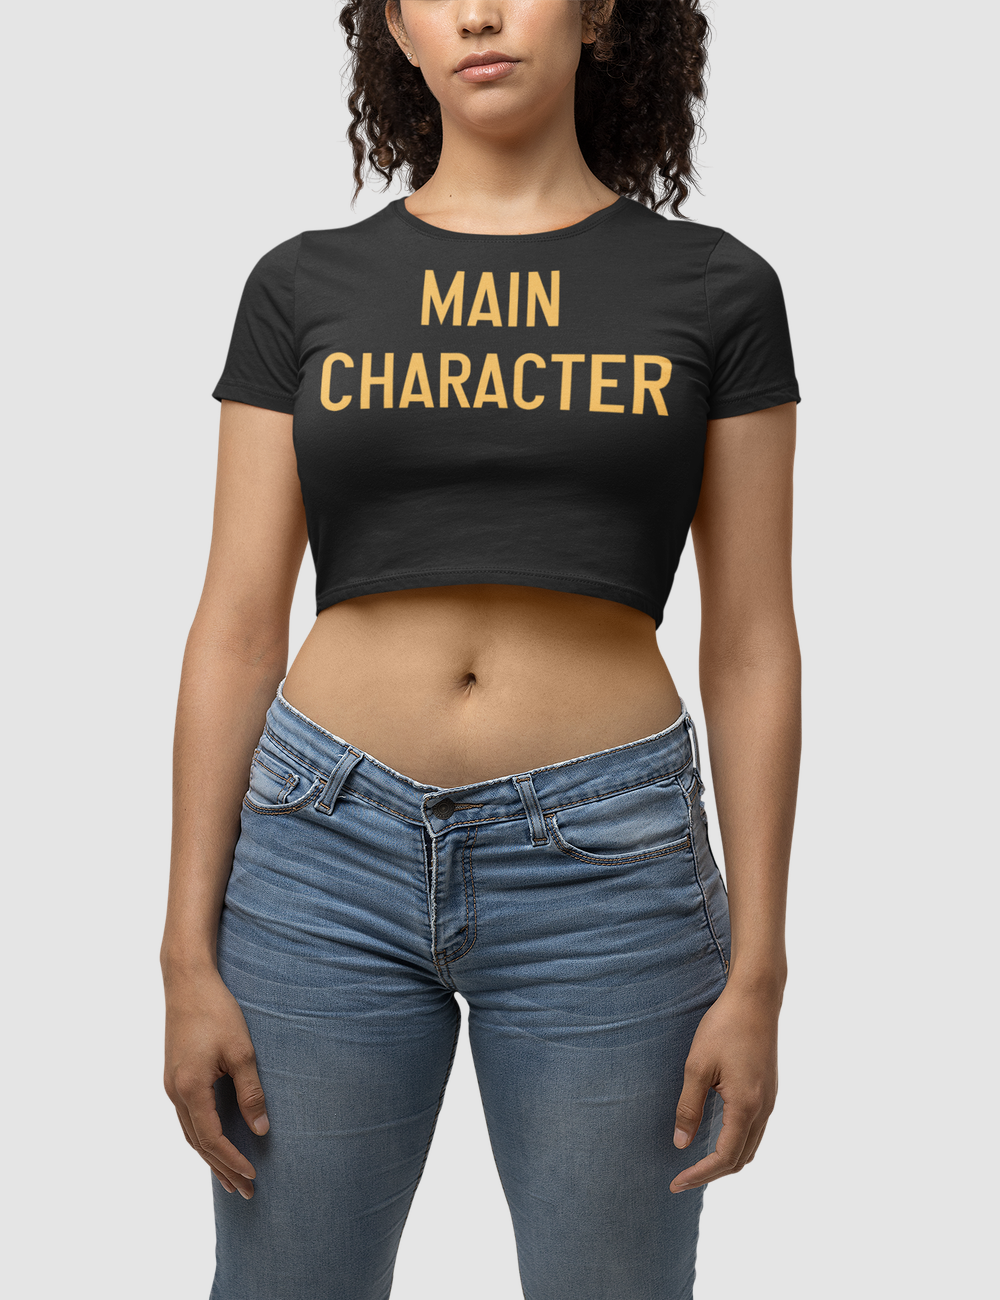 Main Character Women's Fitted Crop Top T-Shirt OniTakai